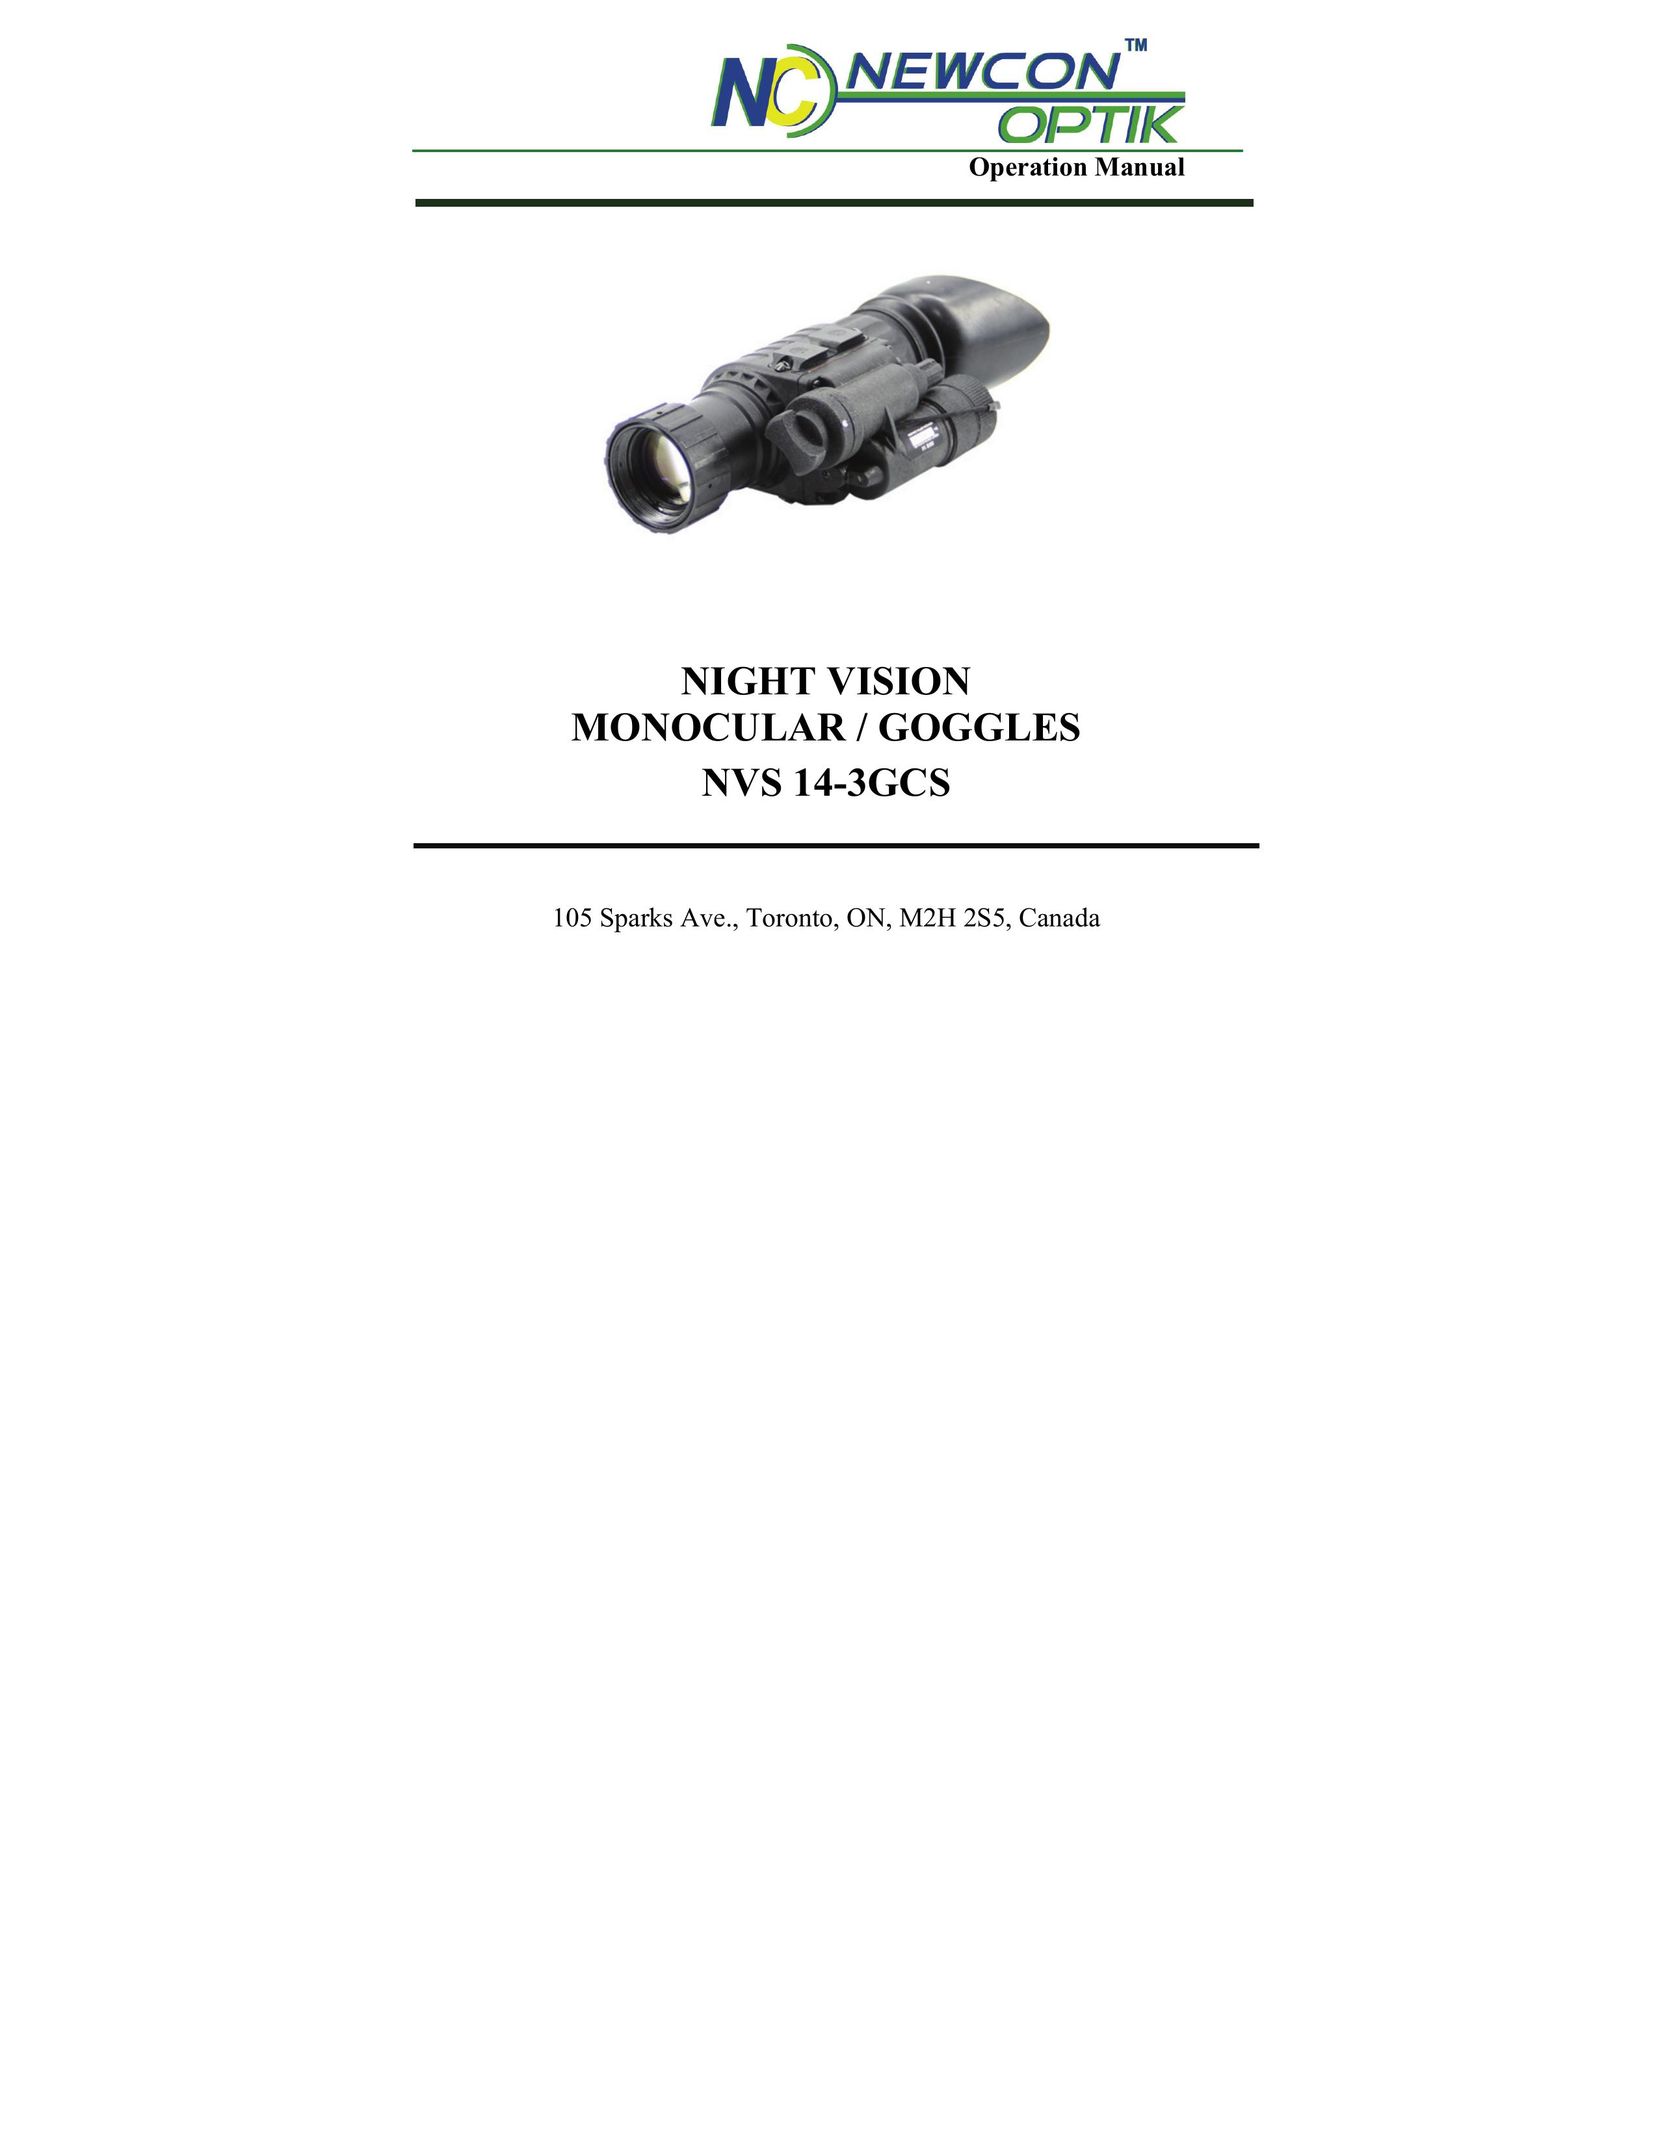 Newcon Optik NVS 14-3GCS Binoculars User Manual